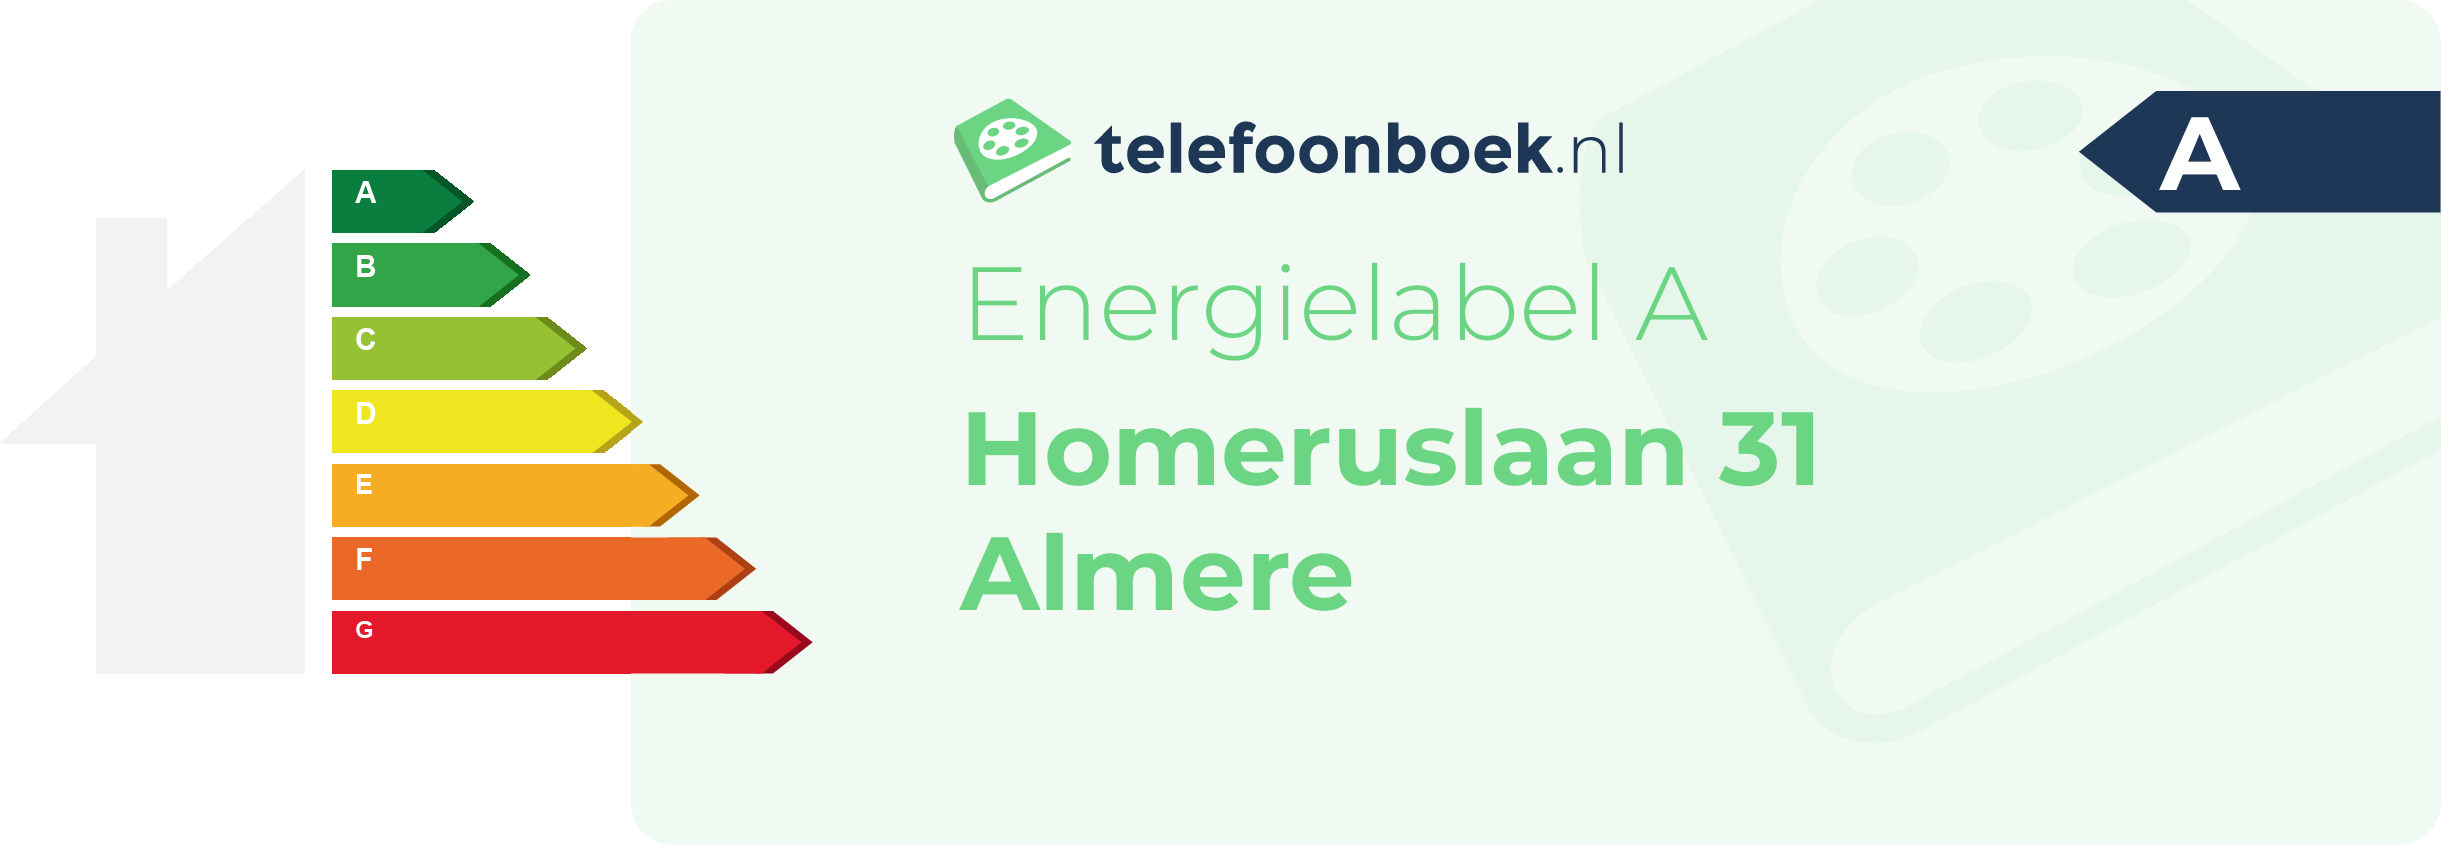 Energielabel Homeruslaan 31 Almere